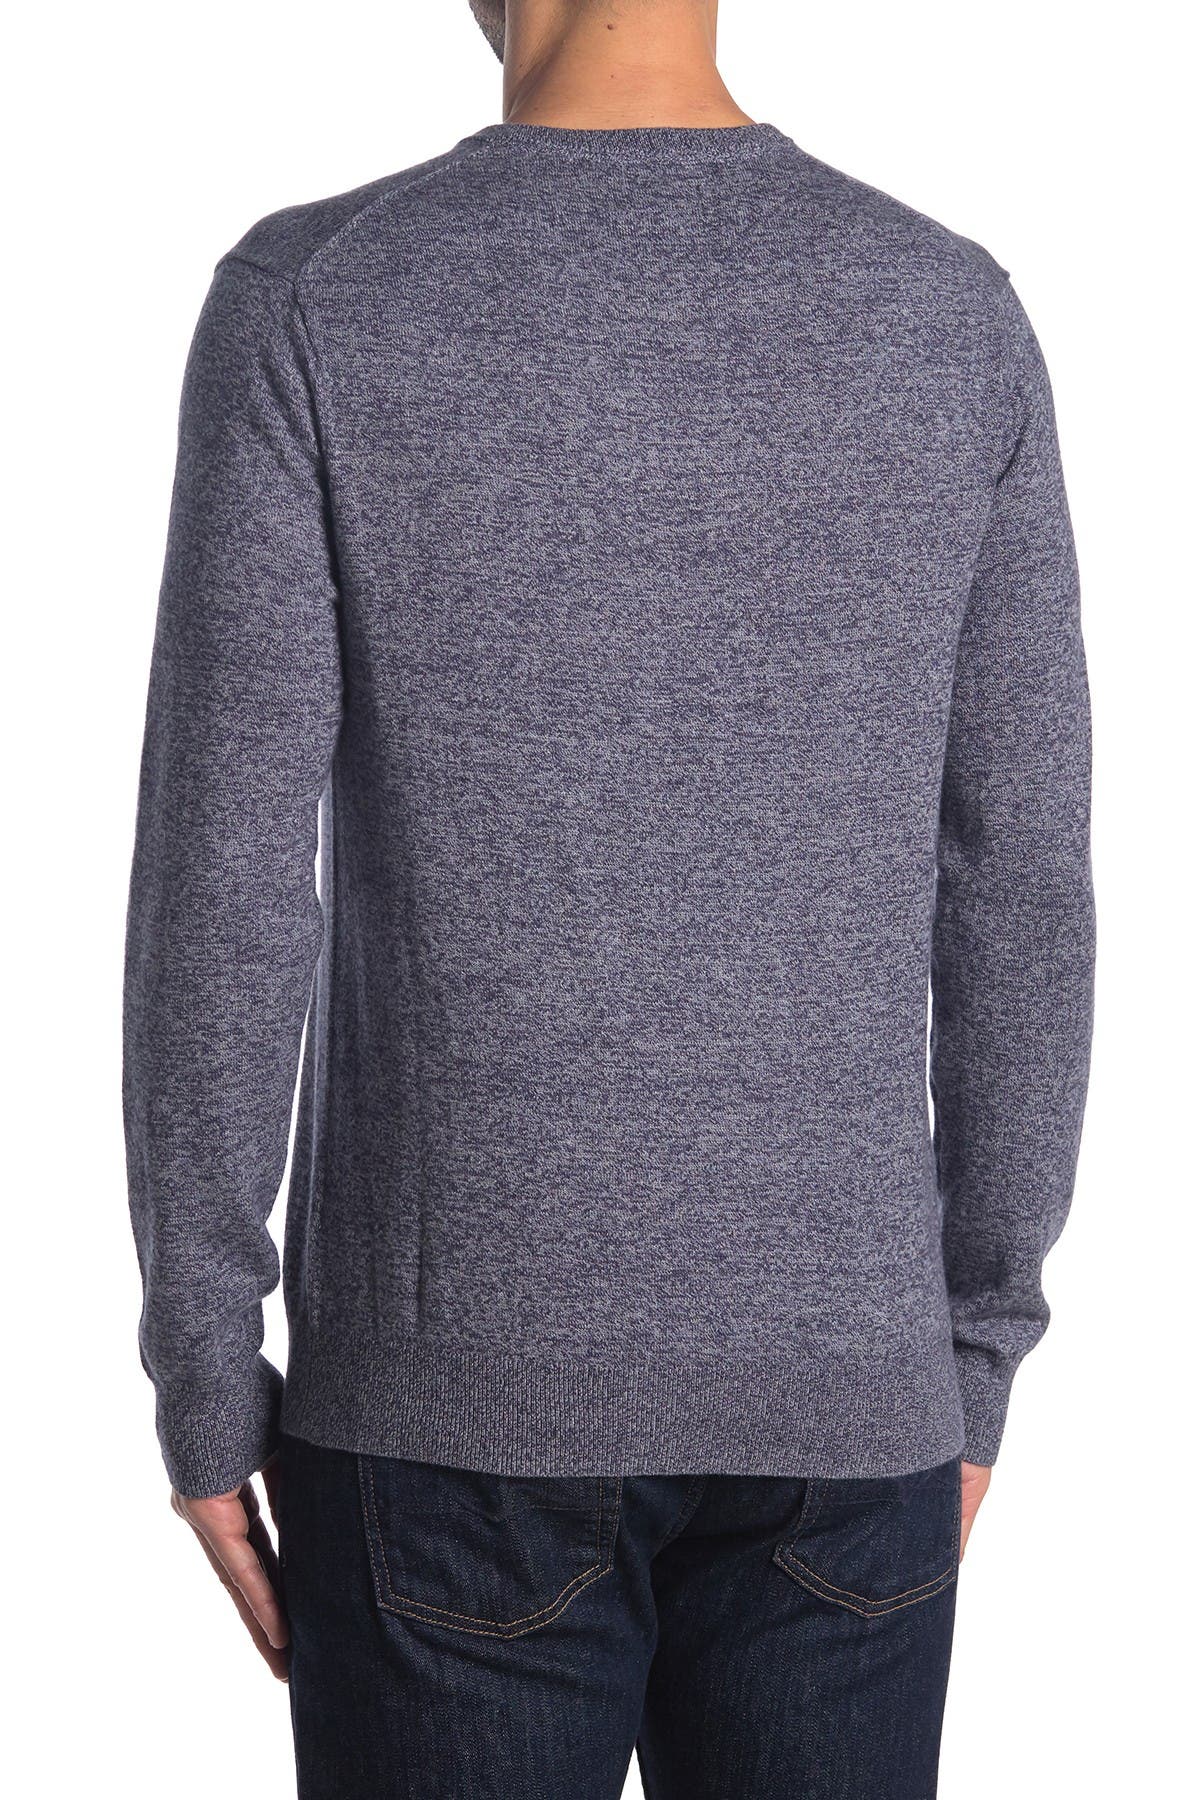 WALLIN & BROS | Solid V-Neck Sweater | Nordstrom Rack